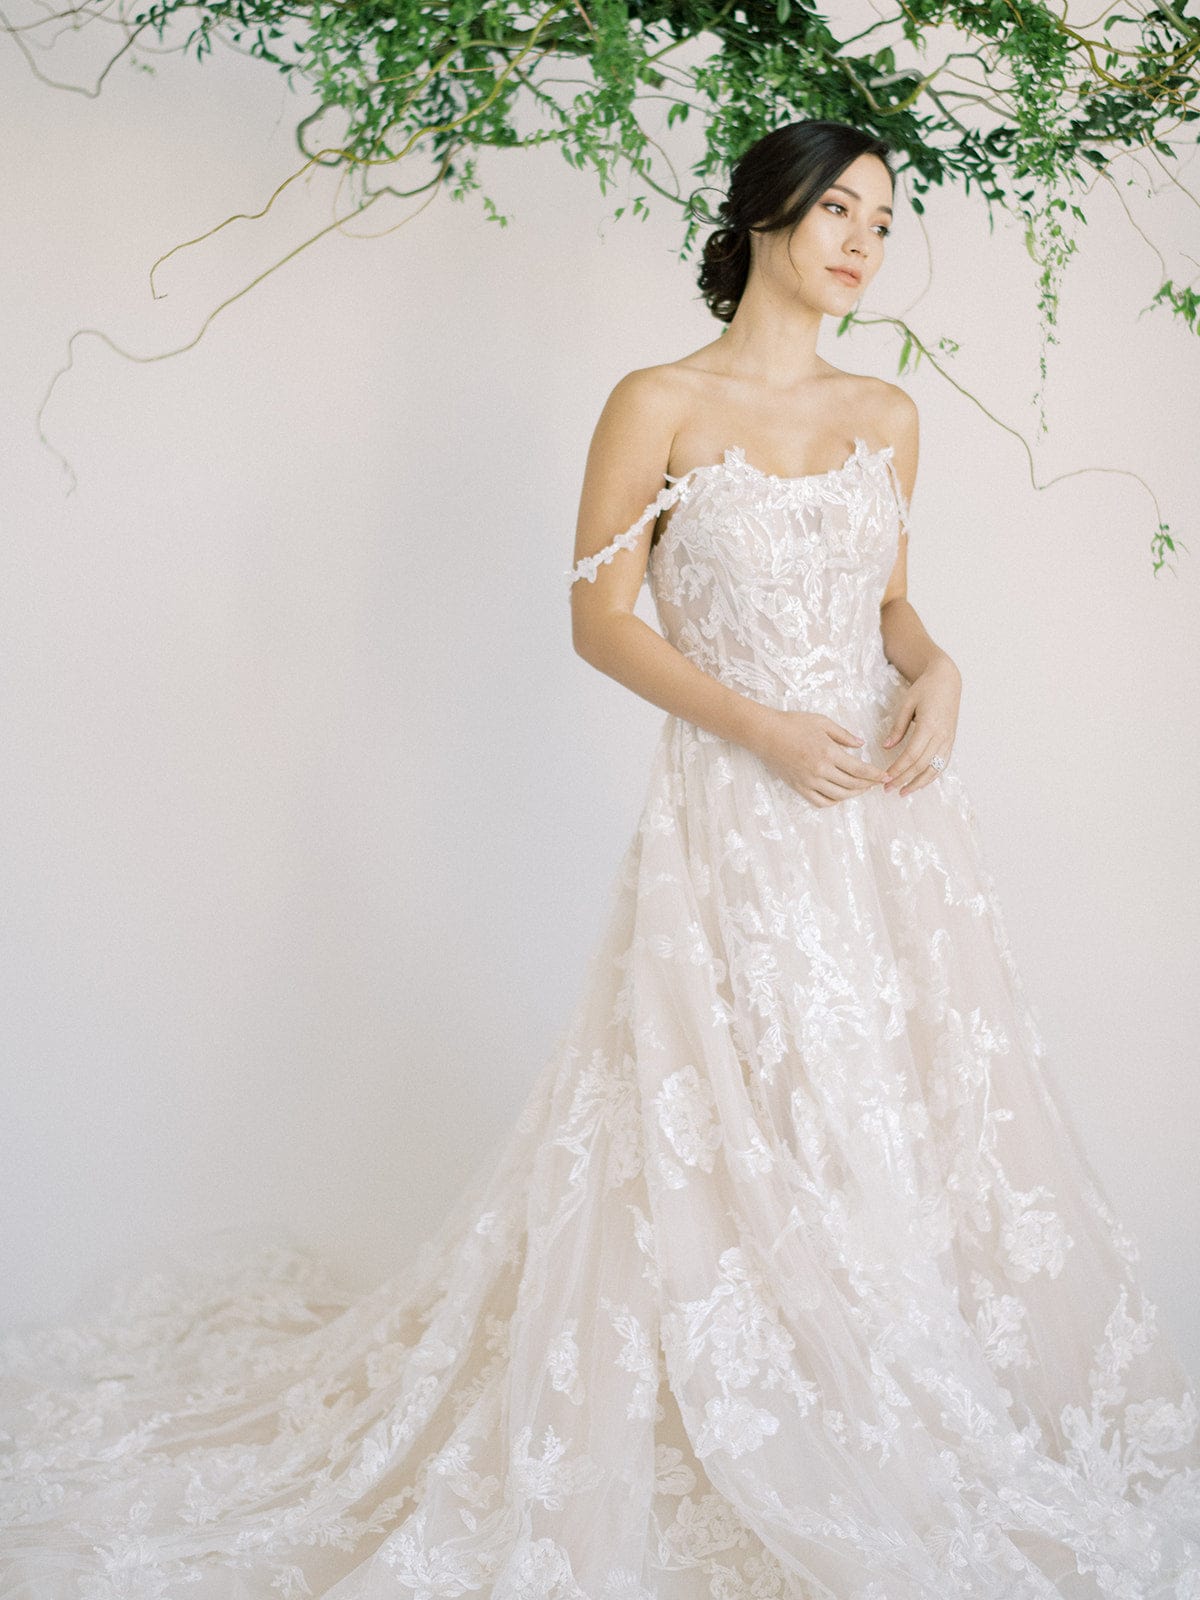 Jinza Bridal Tulle - A-Line Square Neck Corset Wedding Dress Spaghetti Straps, Blush